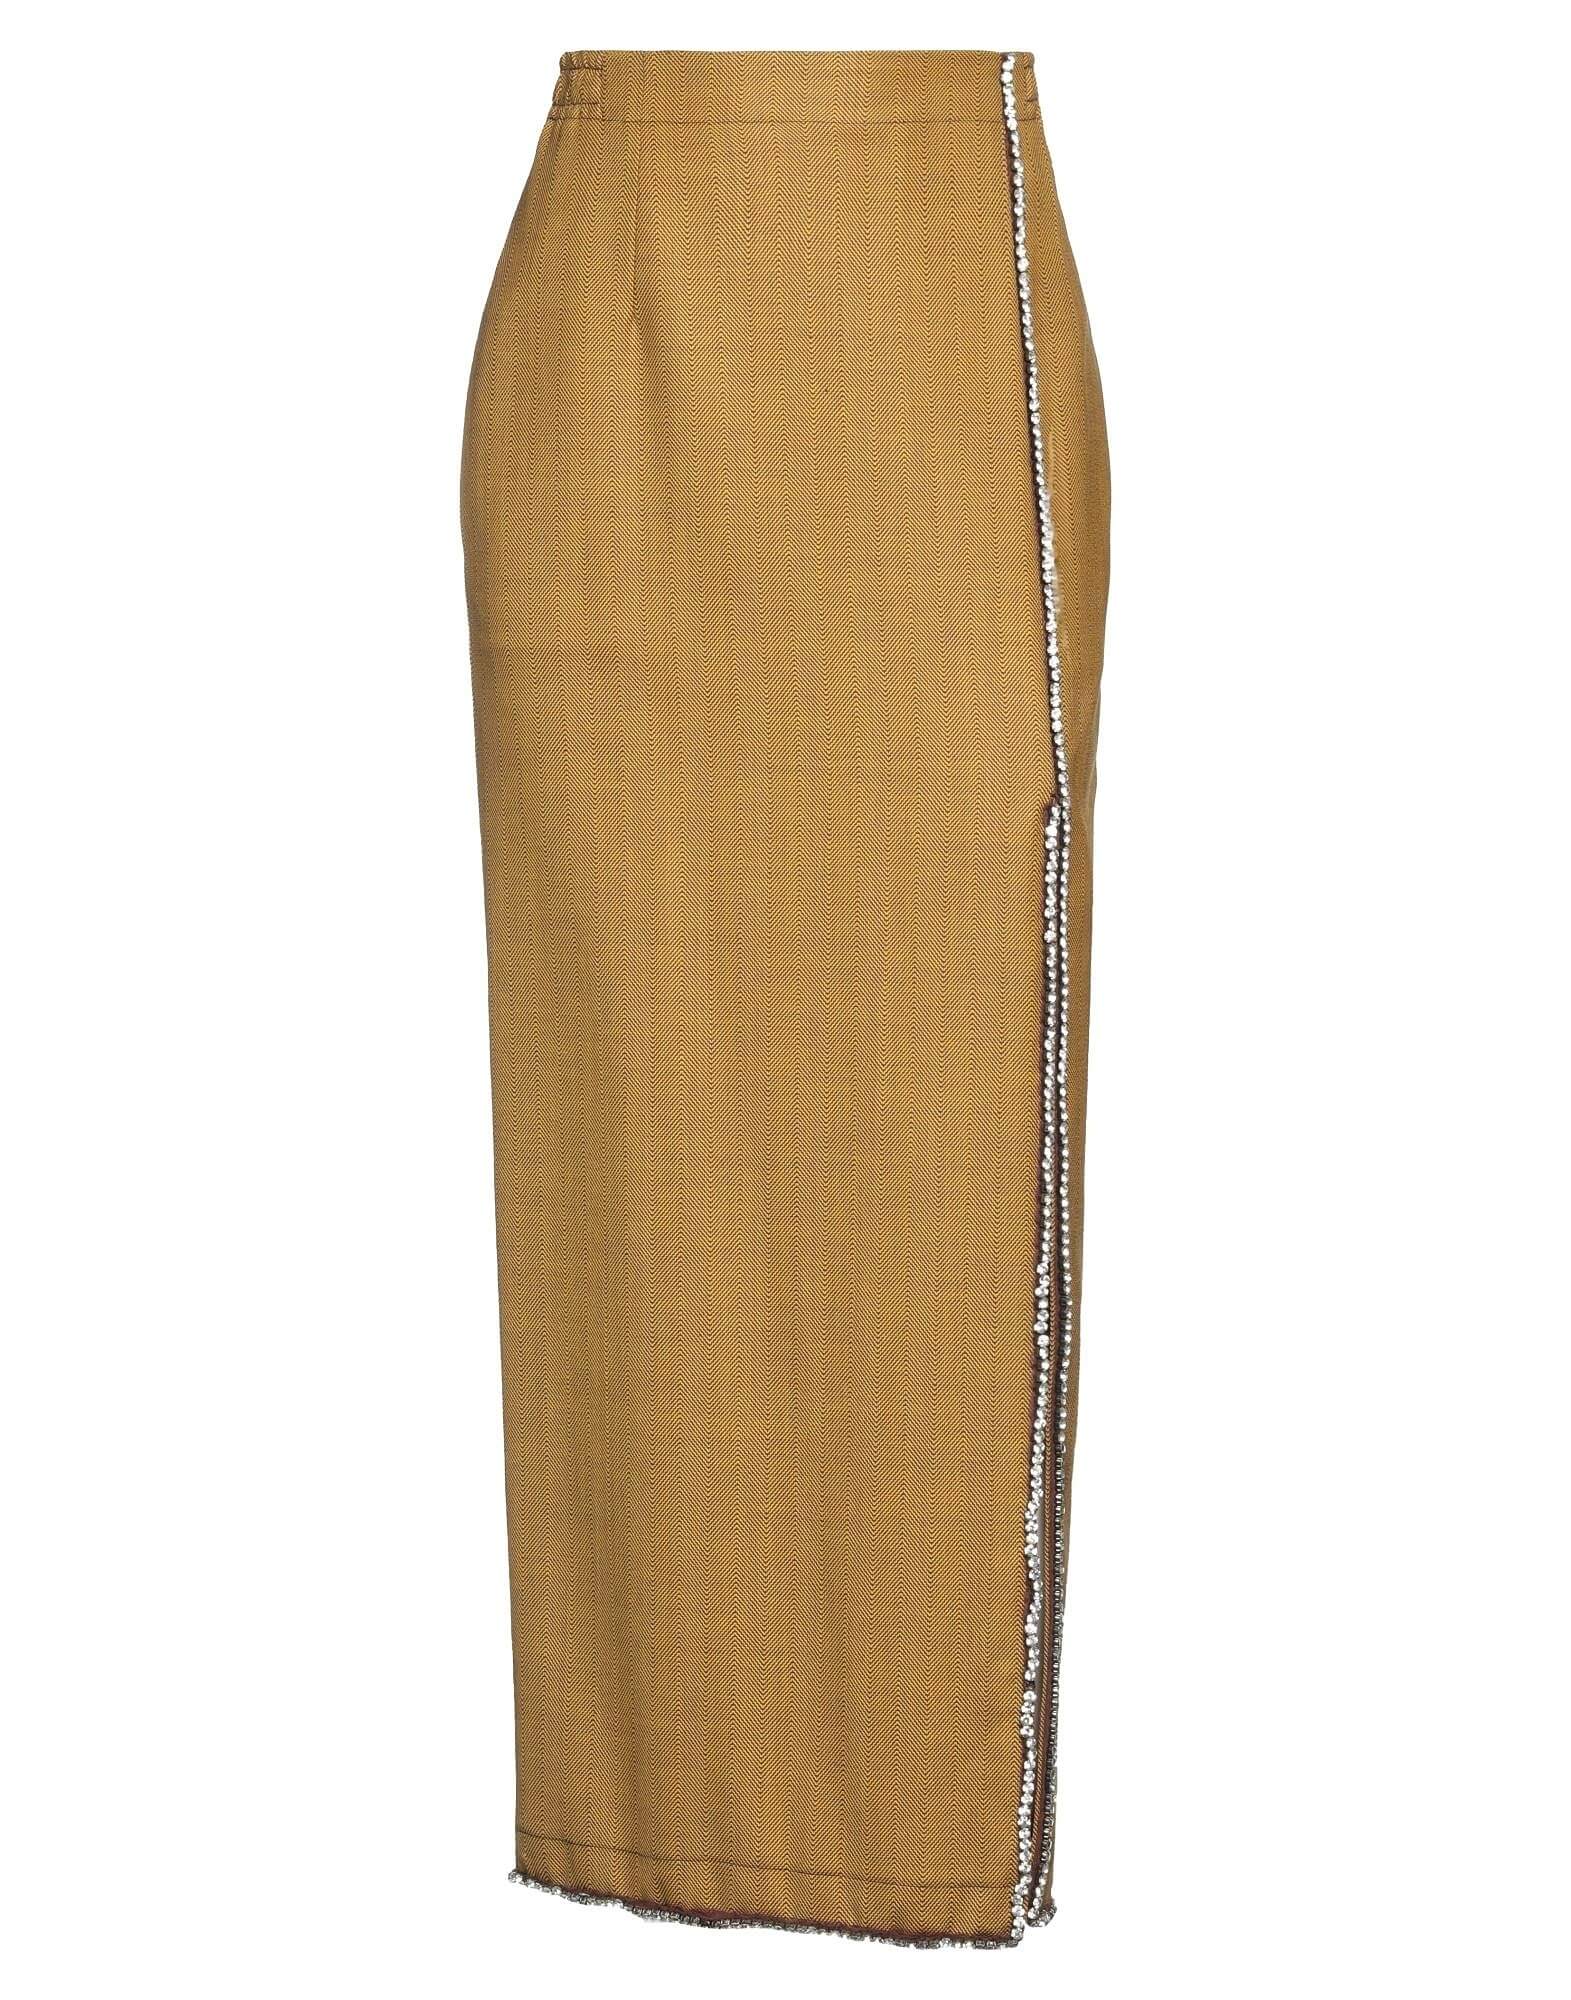 Юбка The Attico Maxi, коричневый юбка карандаш baon макси пояс на резинке размер s 44 коричневый